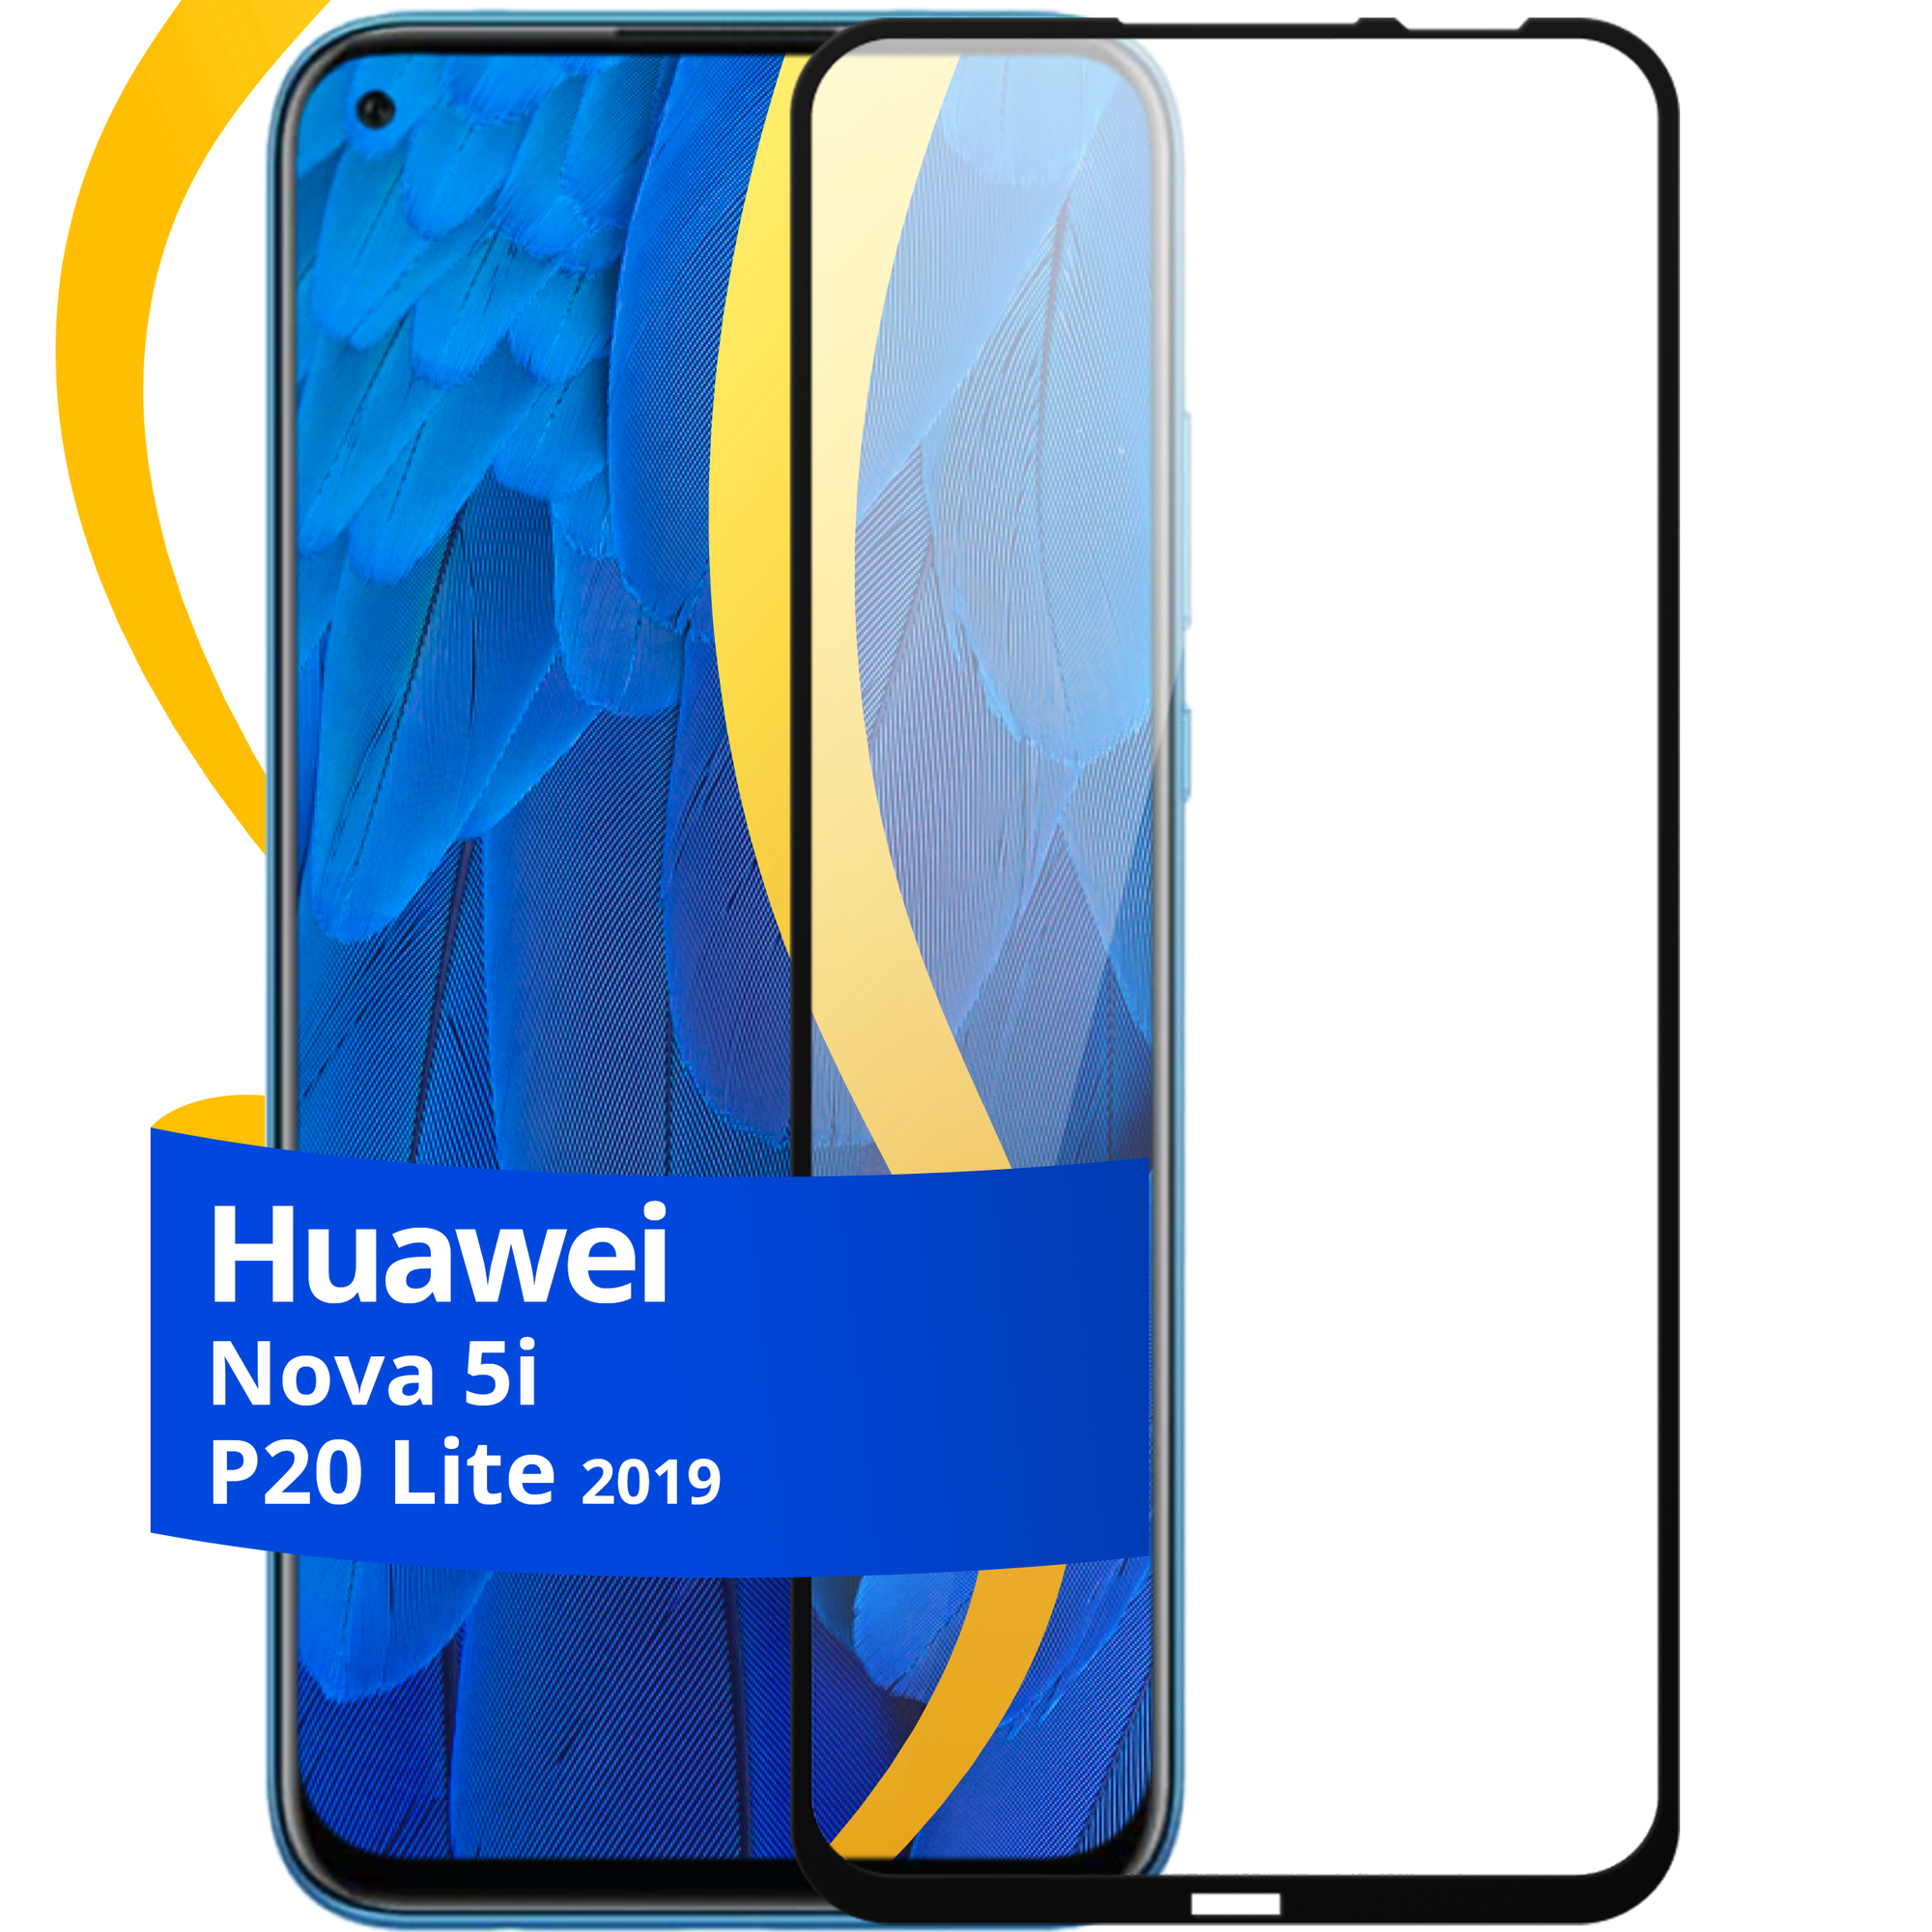 Глянцевое защитное стекло для телефона Huawei Nova 5i и P20 lite 2019 / Противоударное стекло на cмартфон Хуавей Нова 5 ай и П20 Лайт 2019